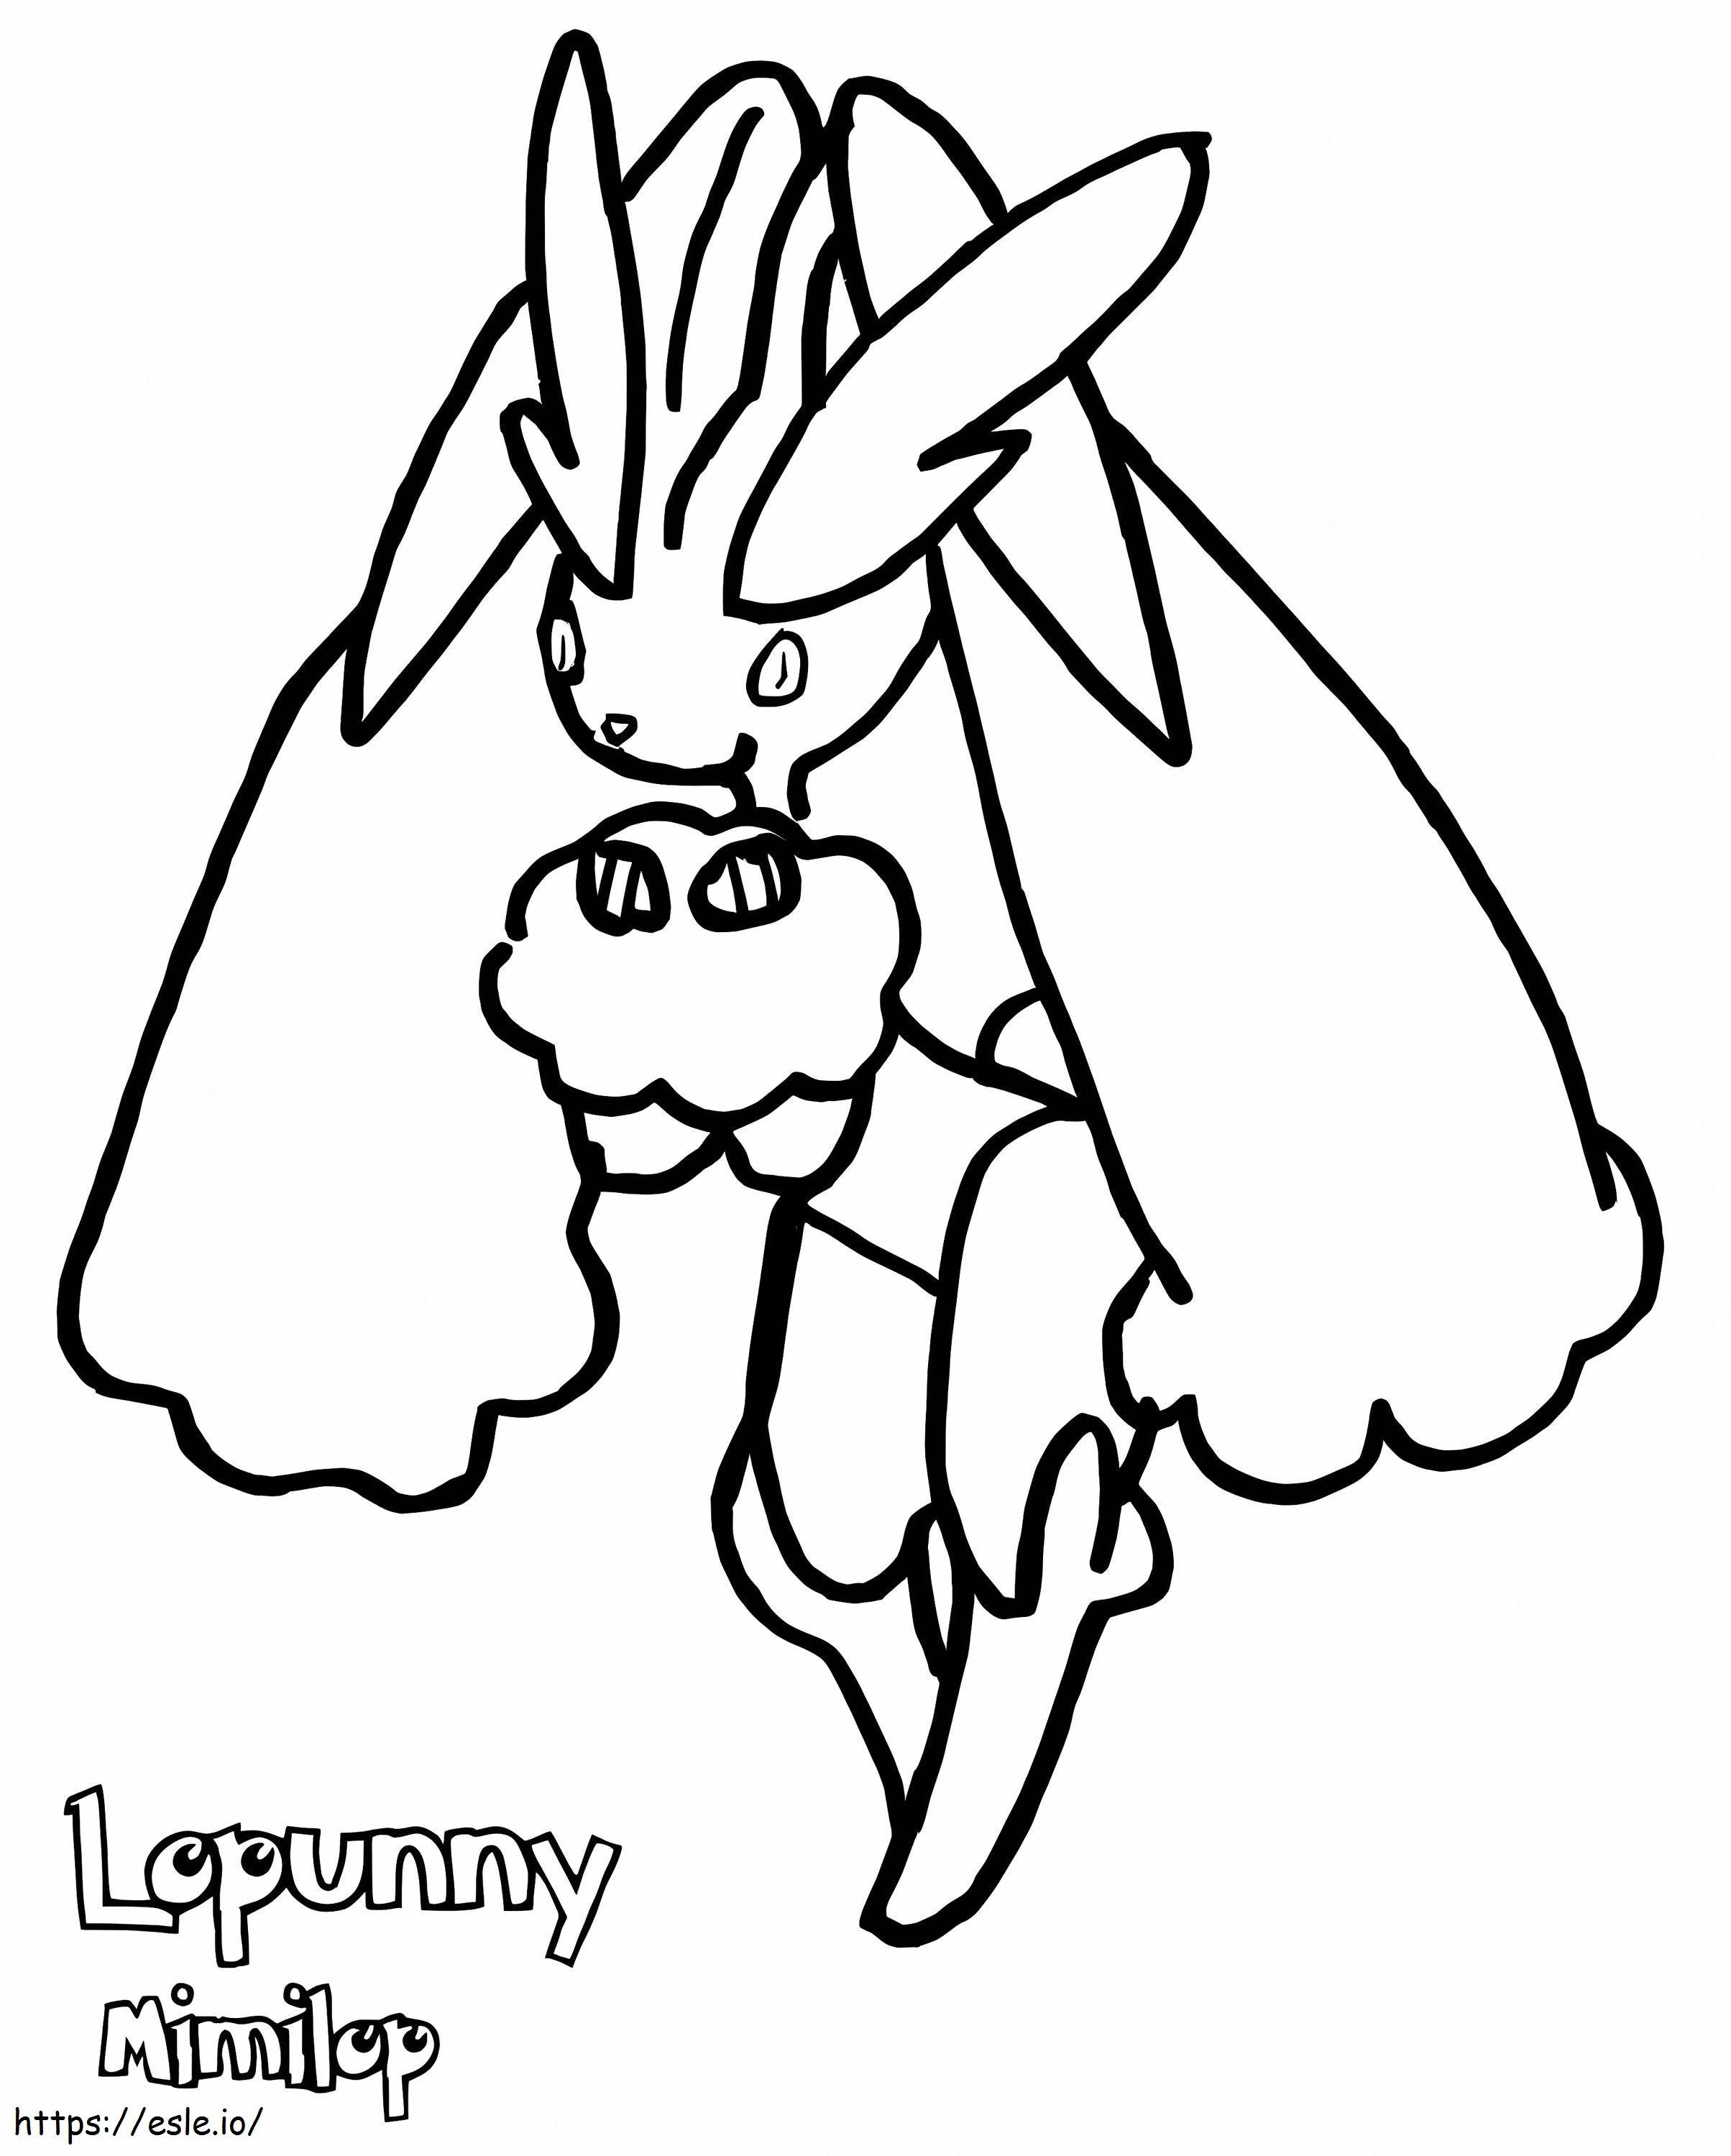 Pokemon Lopunny ausmalbilder